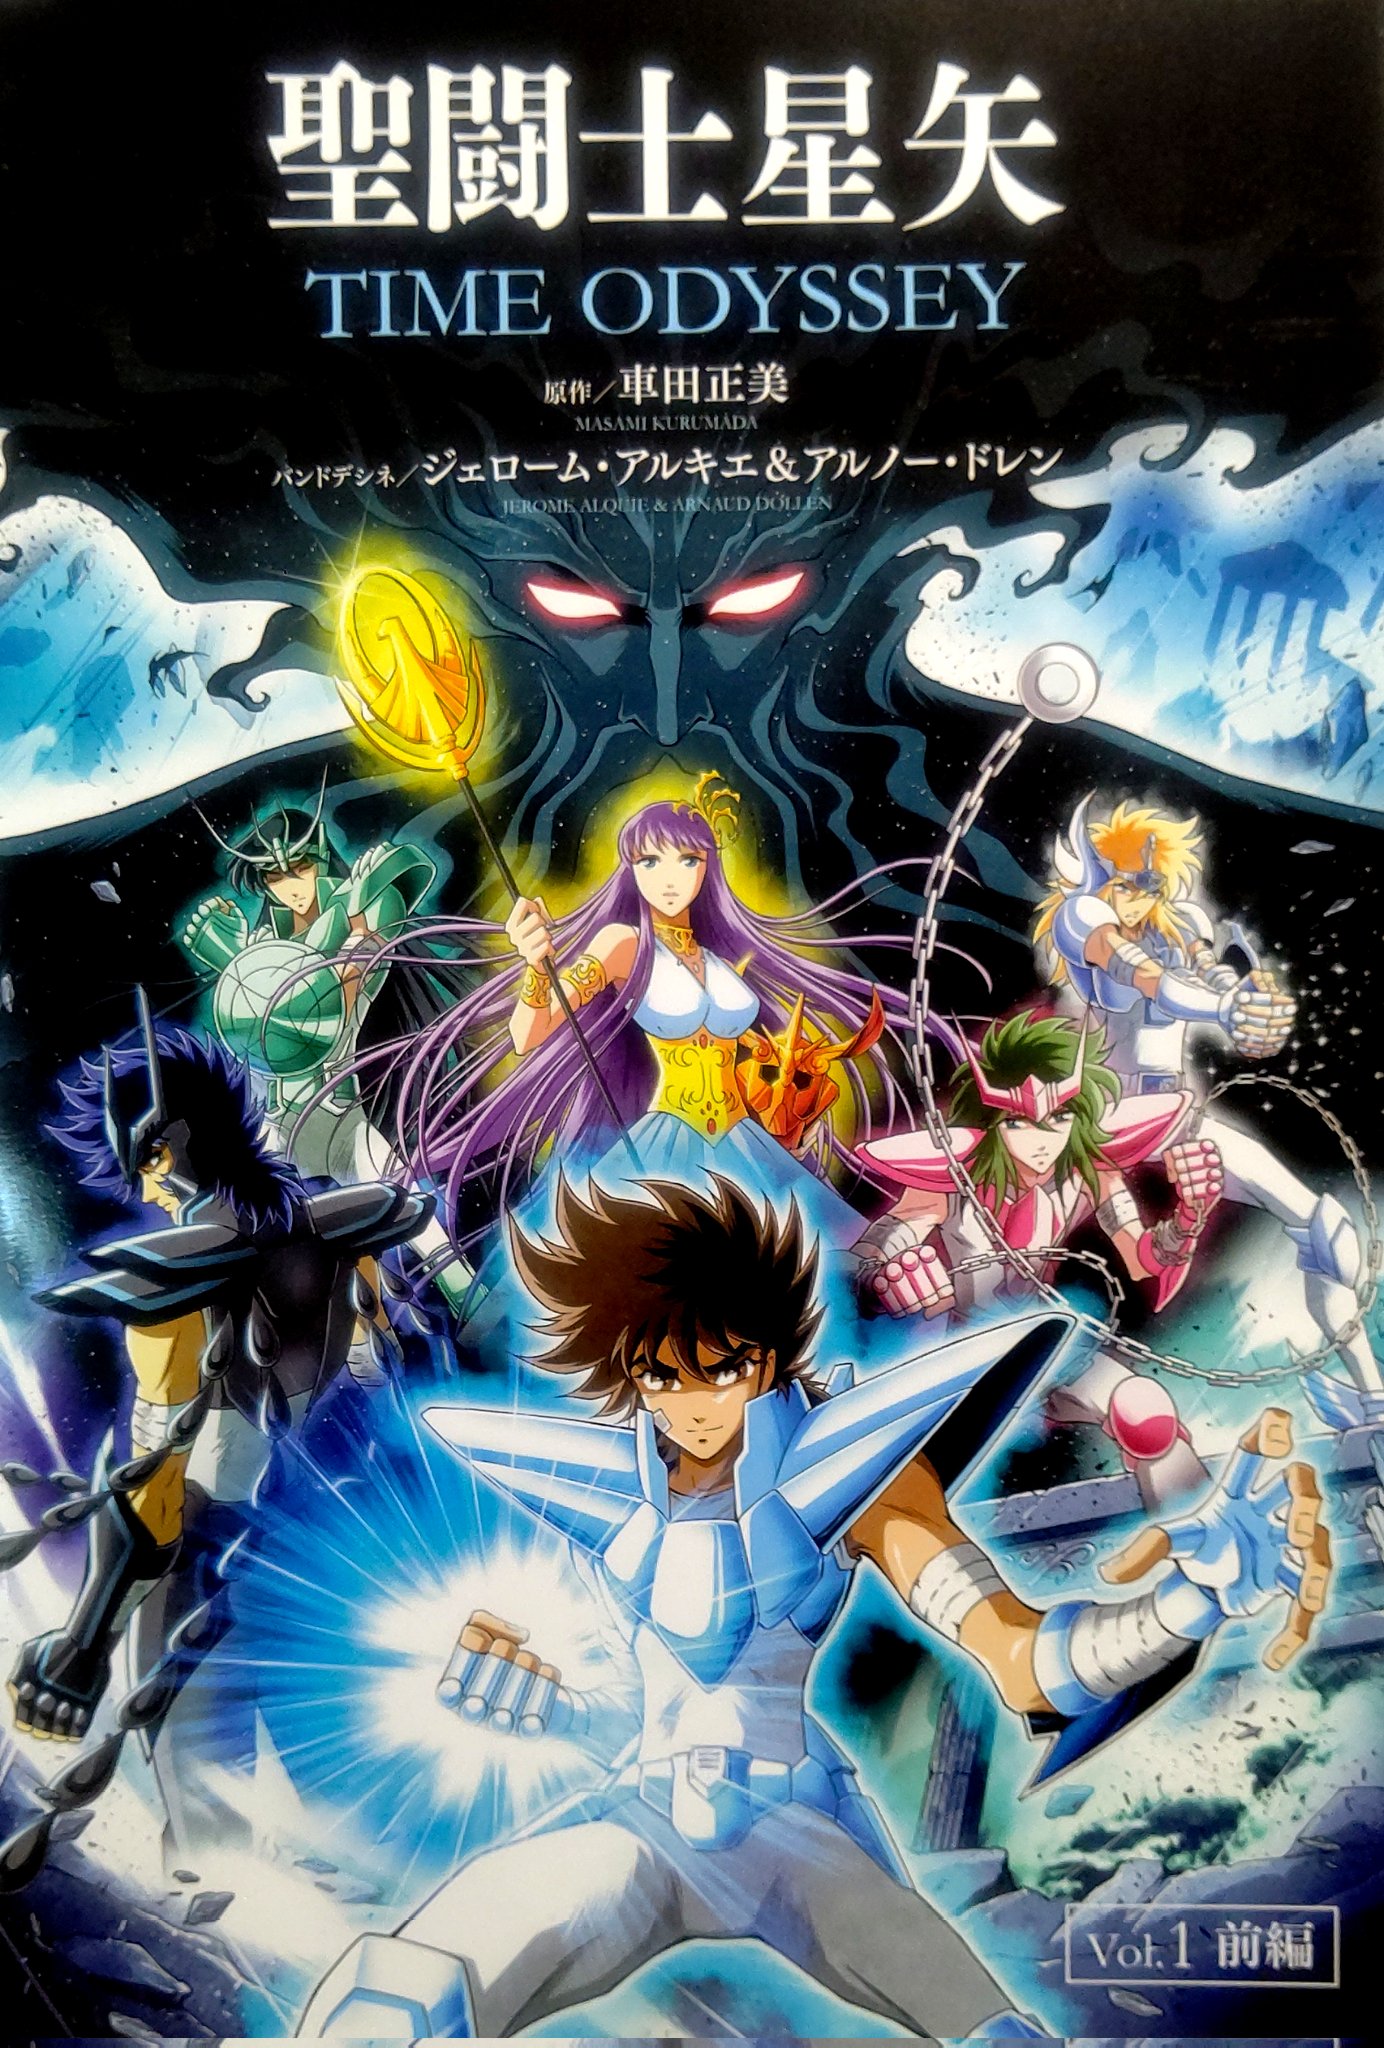 Os Cavaleiros do Zodíaco (3DCG) - 1ª temporada <- Animes - Os